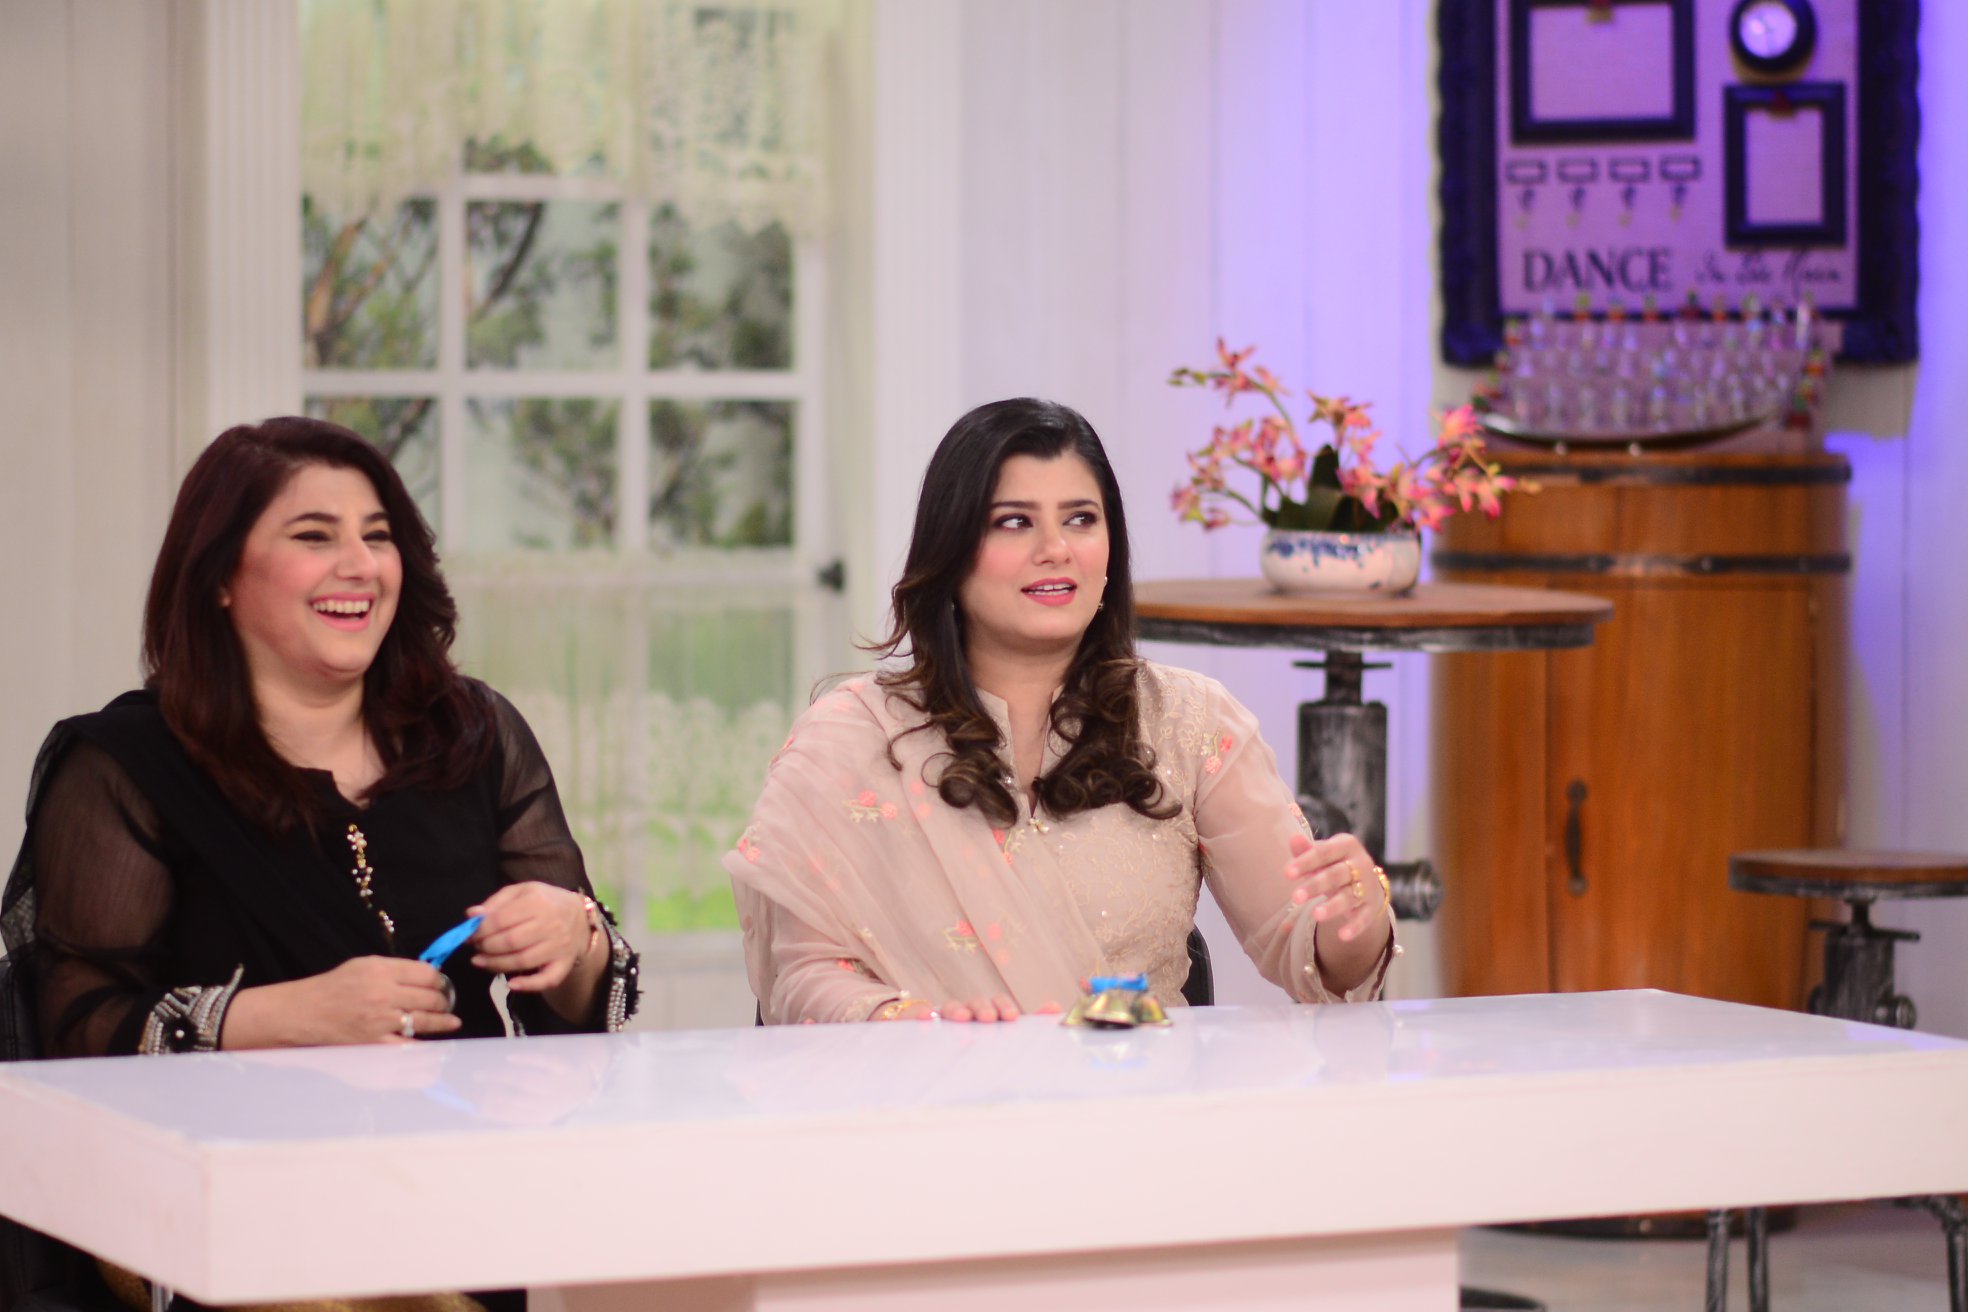 Javeria Saud and Komal Aziz with their Sisters in Nida Yasir Morning Show